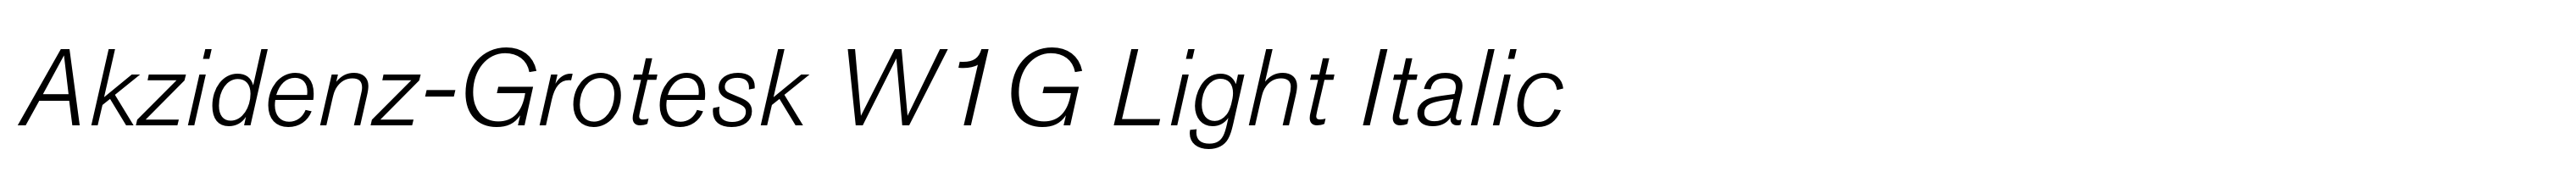 Akzidenz-Grotesk W1G Light Italic